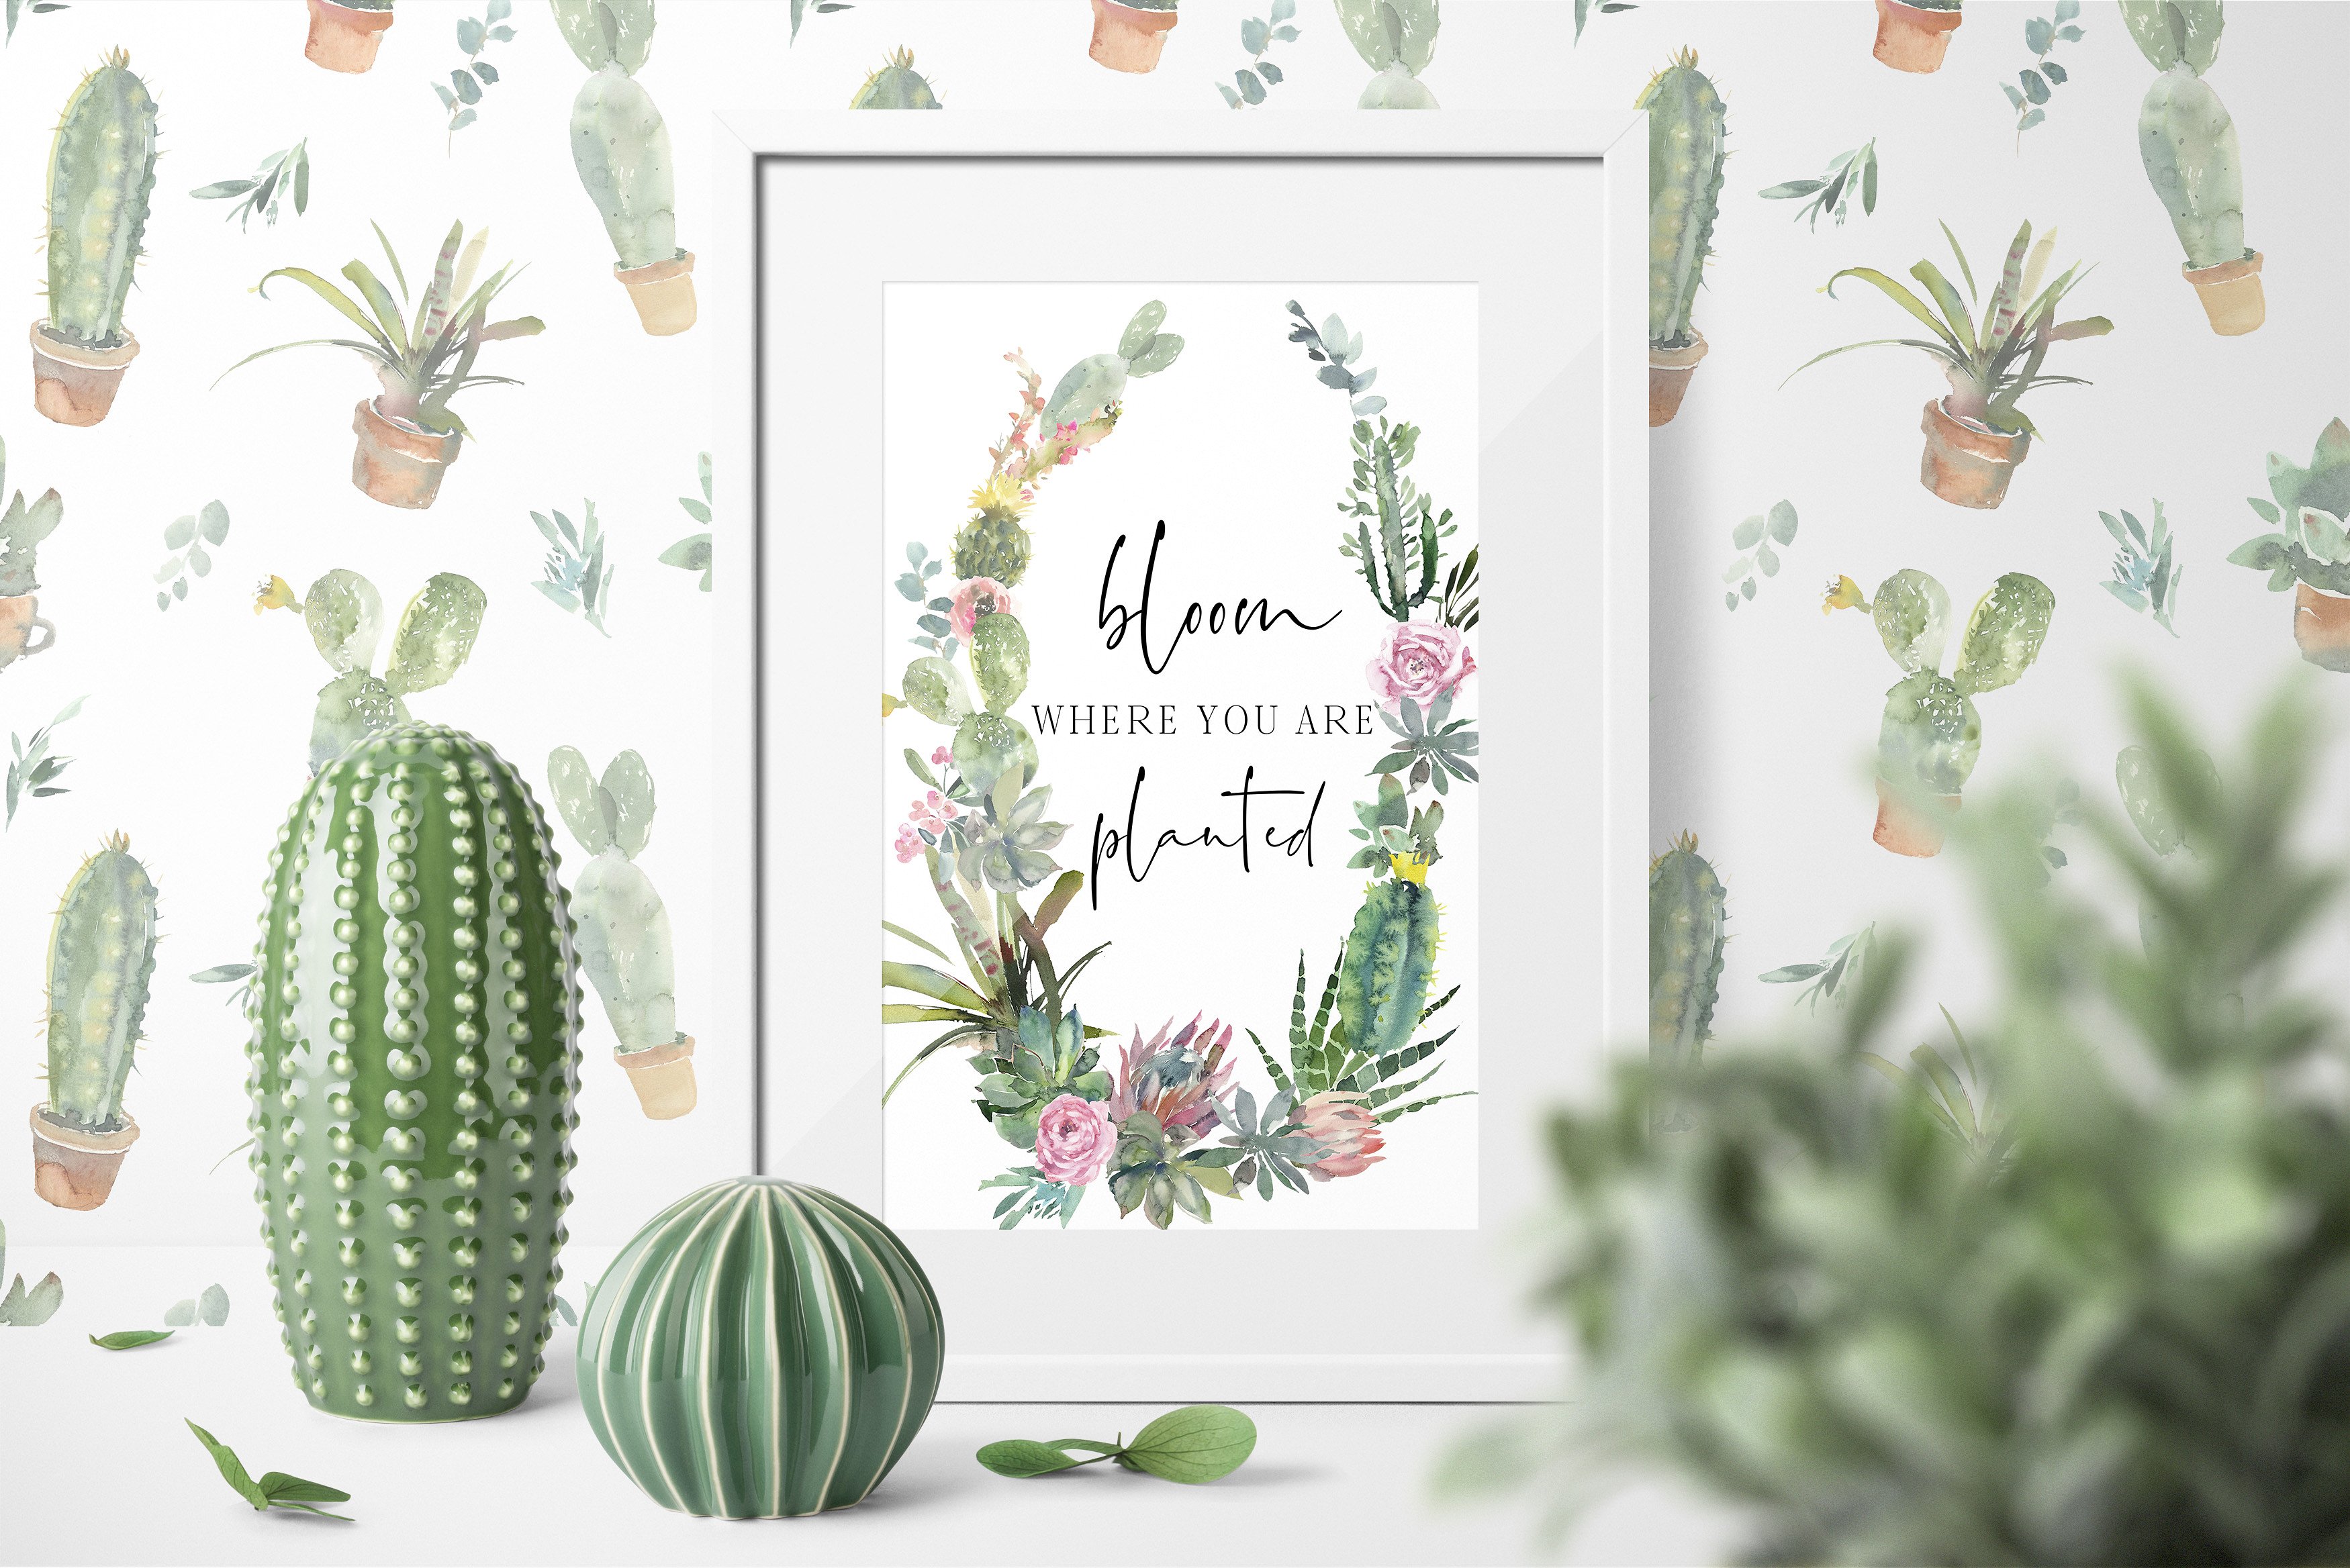 漂亮的手绘仙人掌多肉花卉PNG剪贴画集 Beautiful Hand-Painted Cactus Succulent Flower PNG Clip Art Set插图3